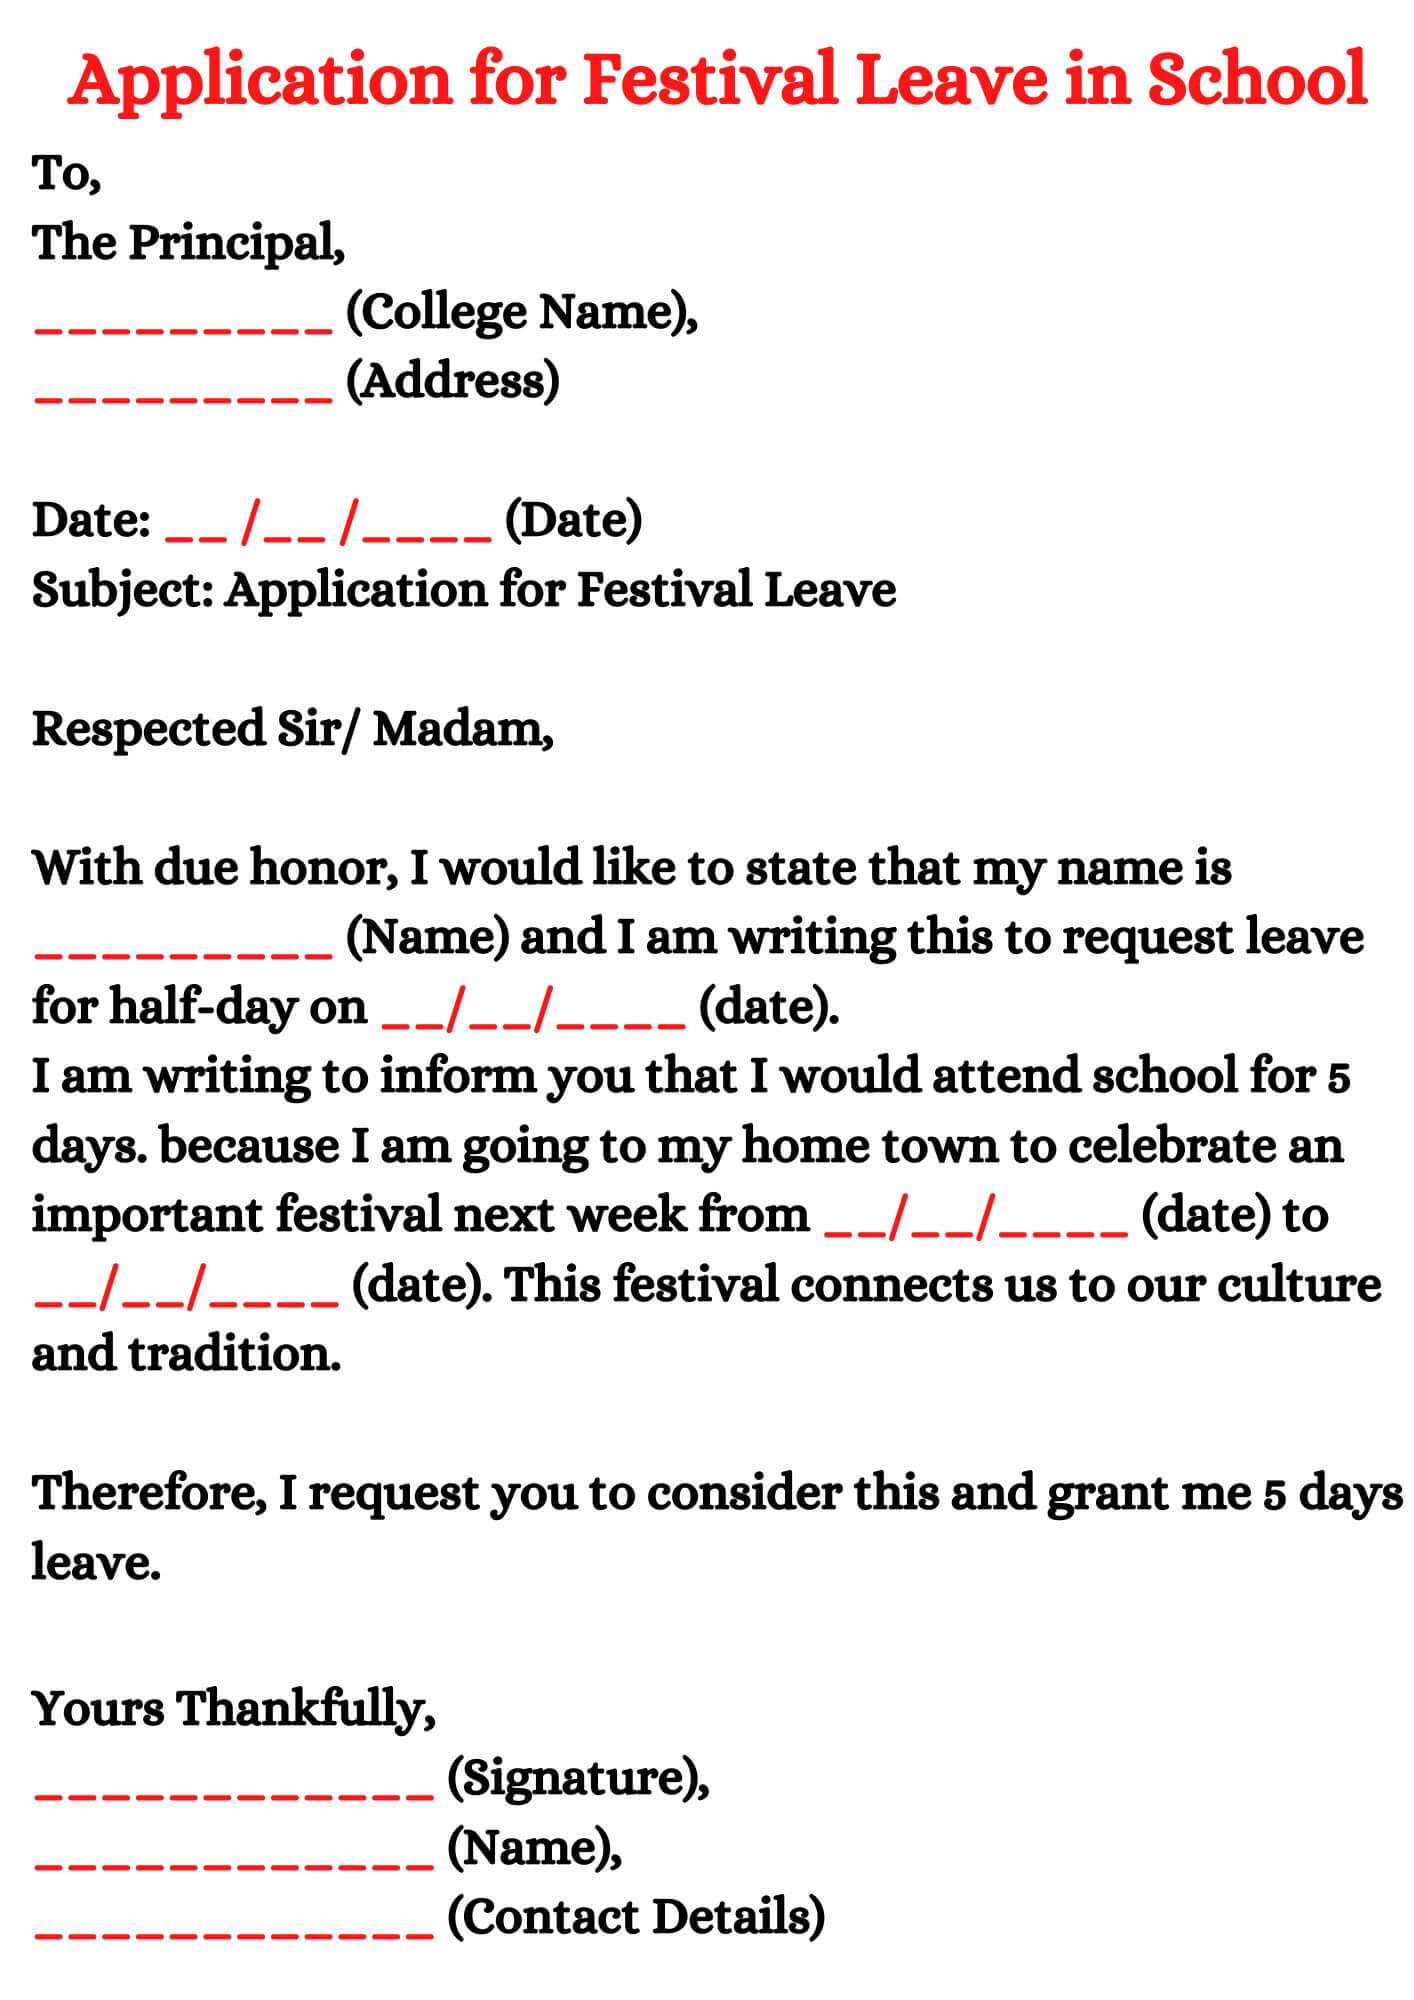 Application for Festival Leave in School